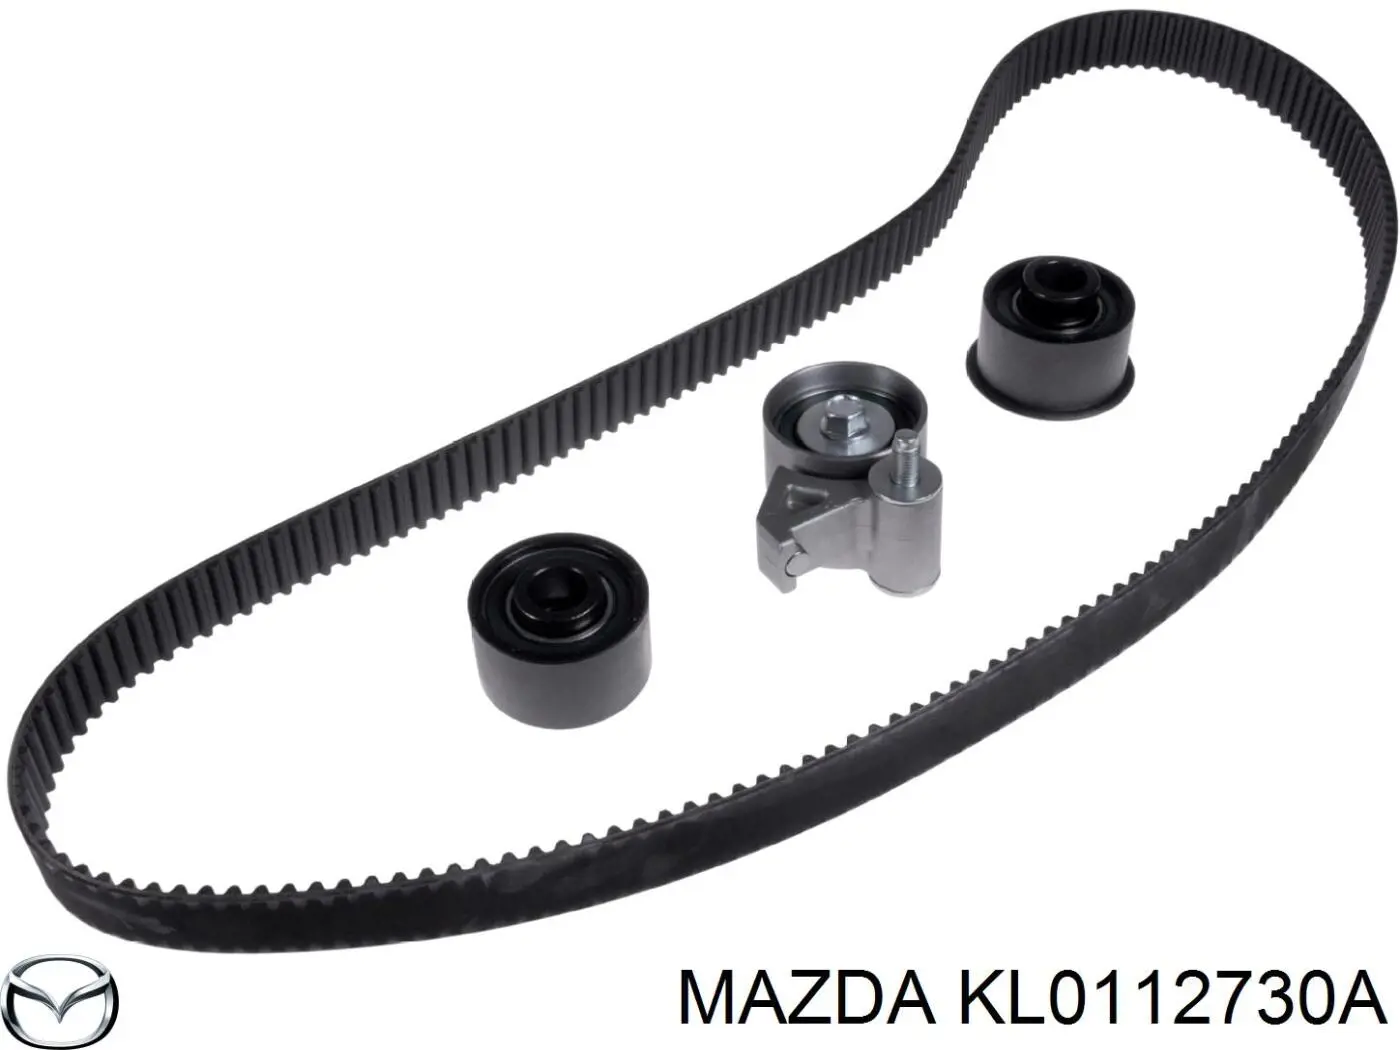 KL0112730A Mazda rodillo intermedio de correa dentada